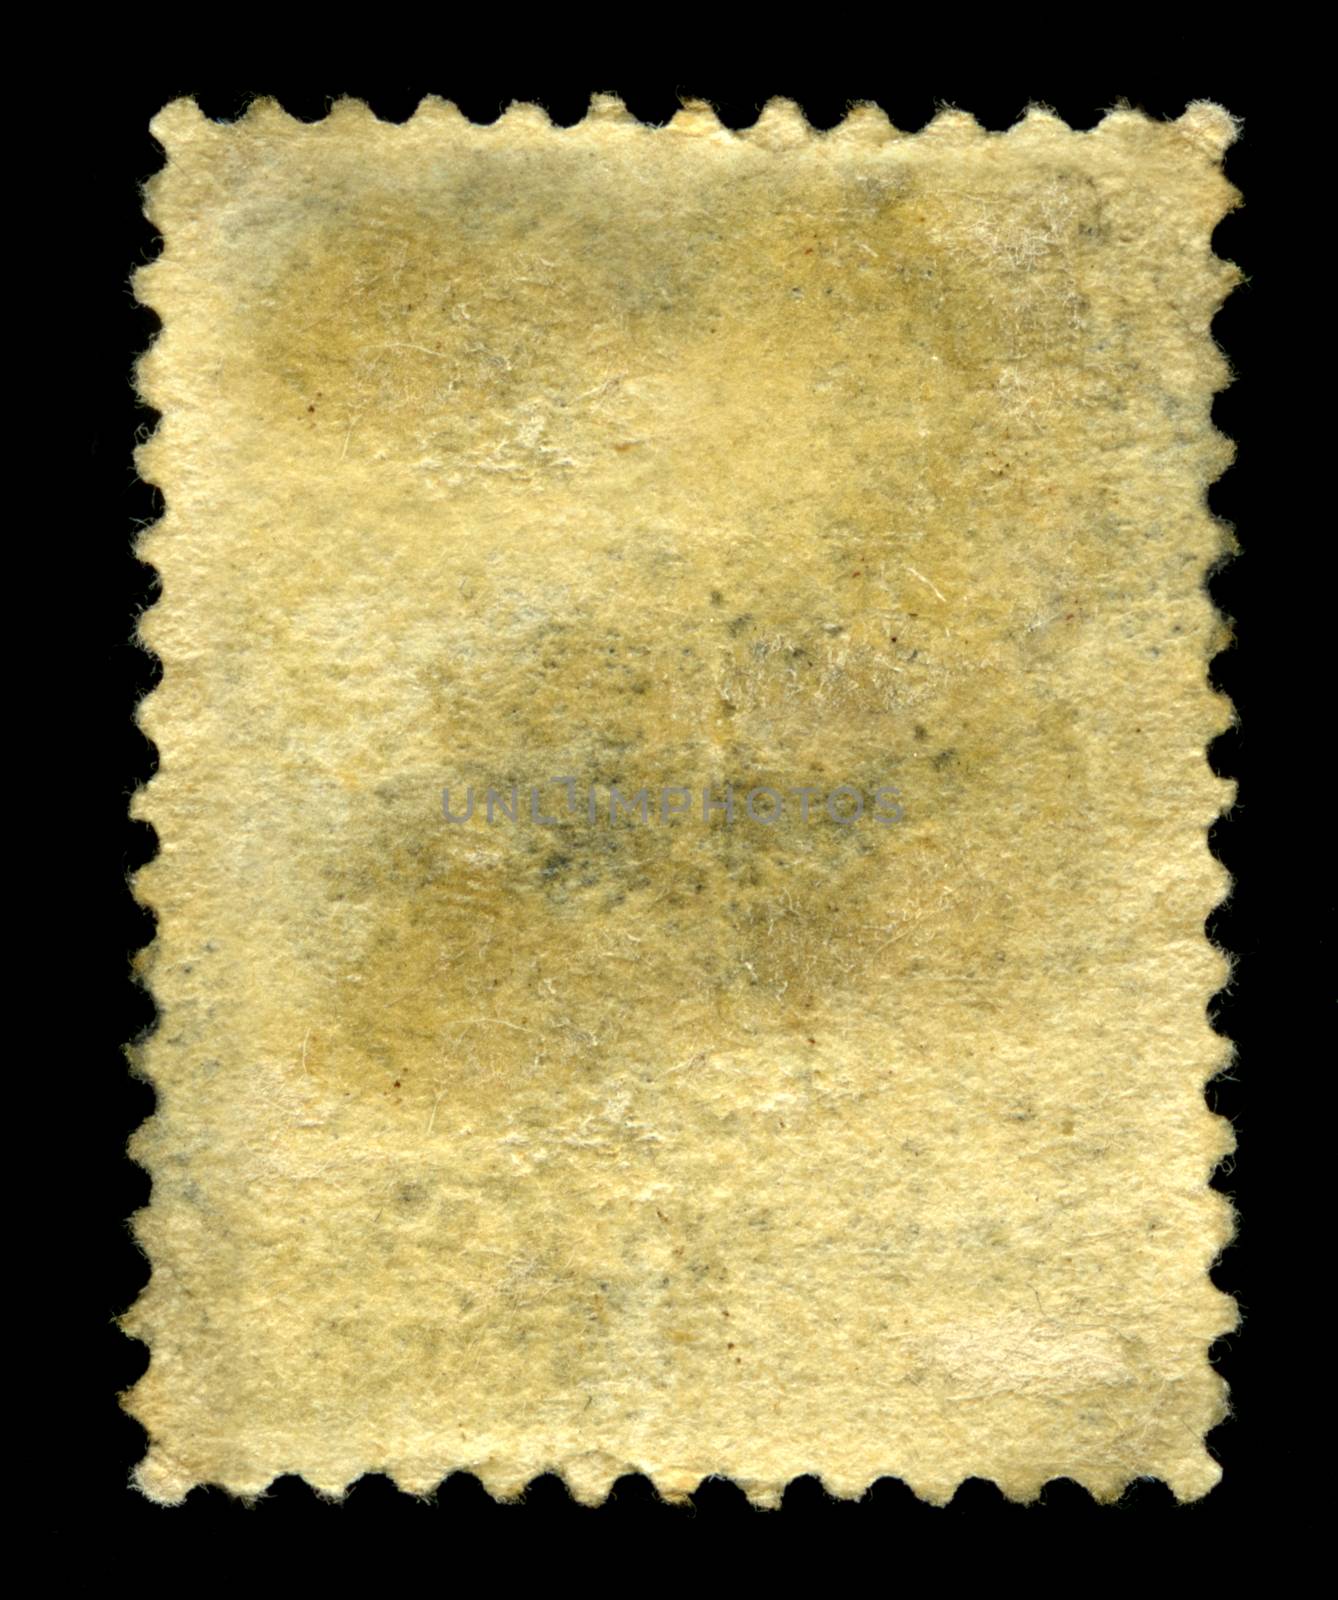 Worn Postage Stamp by chrisdorney